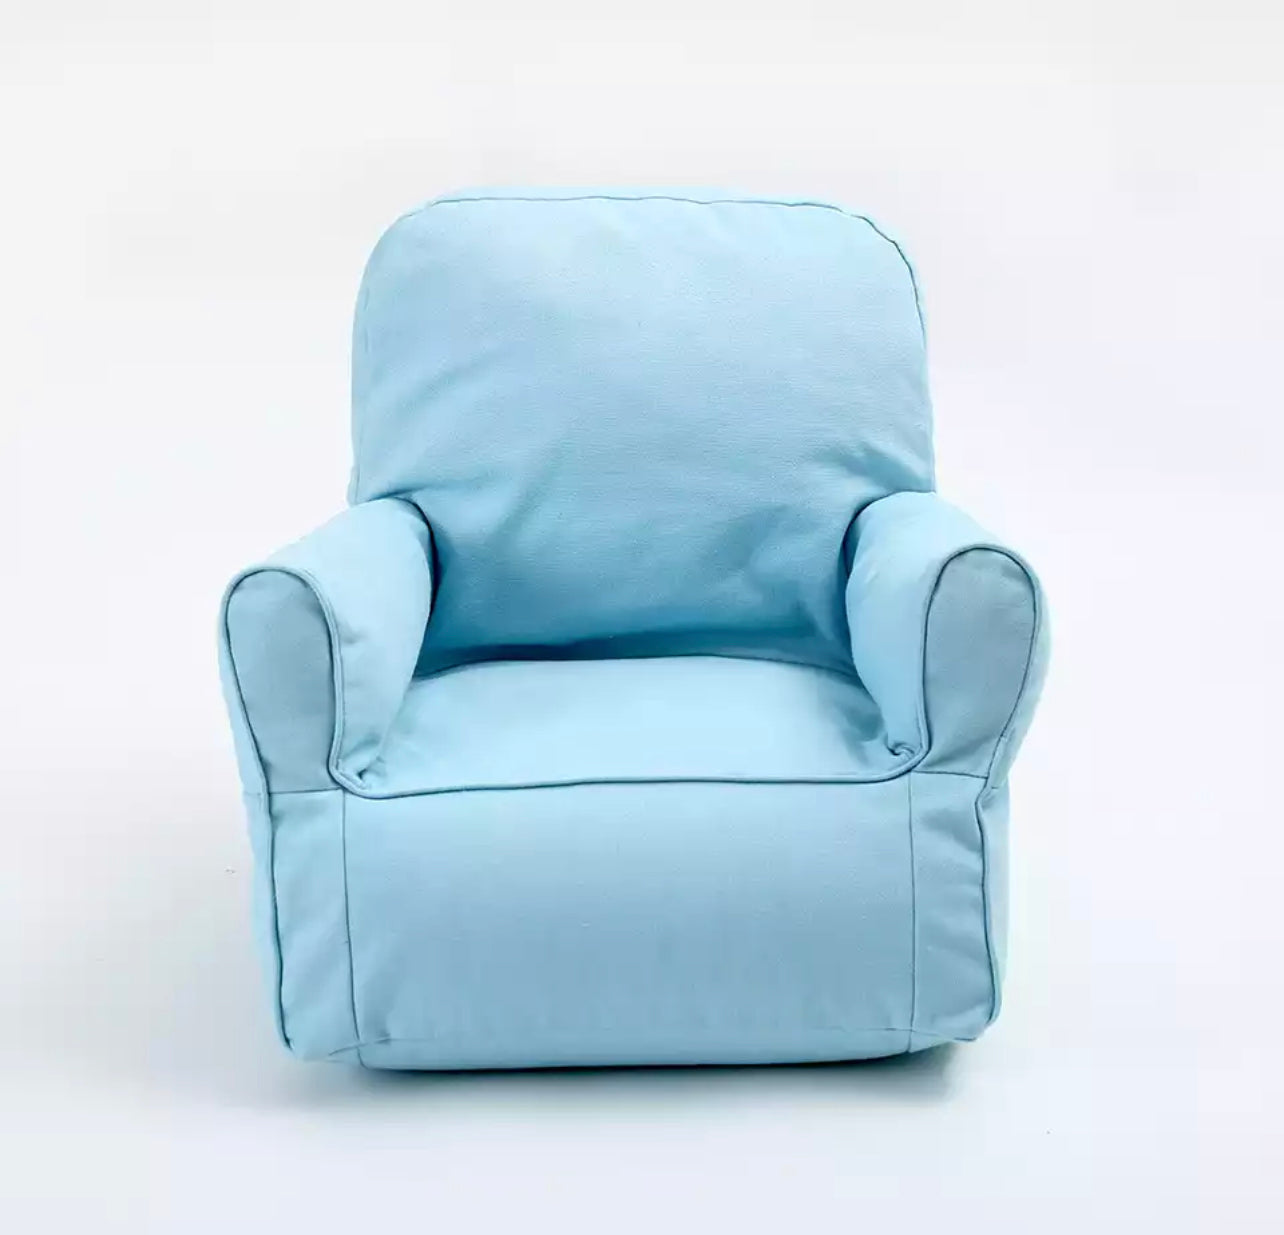 Portable Pet Sofa - Blue